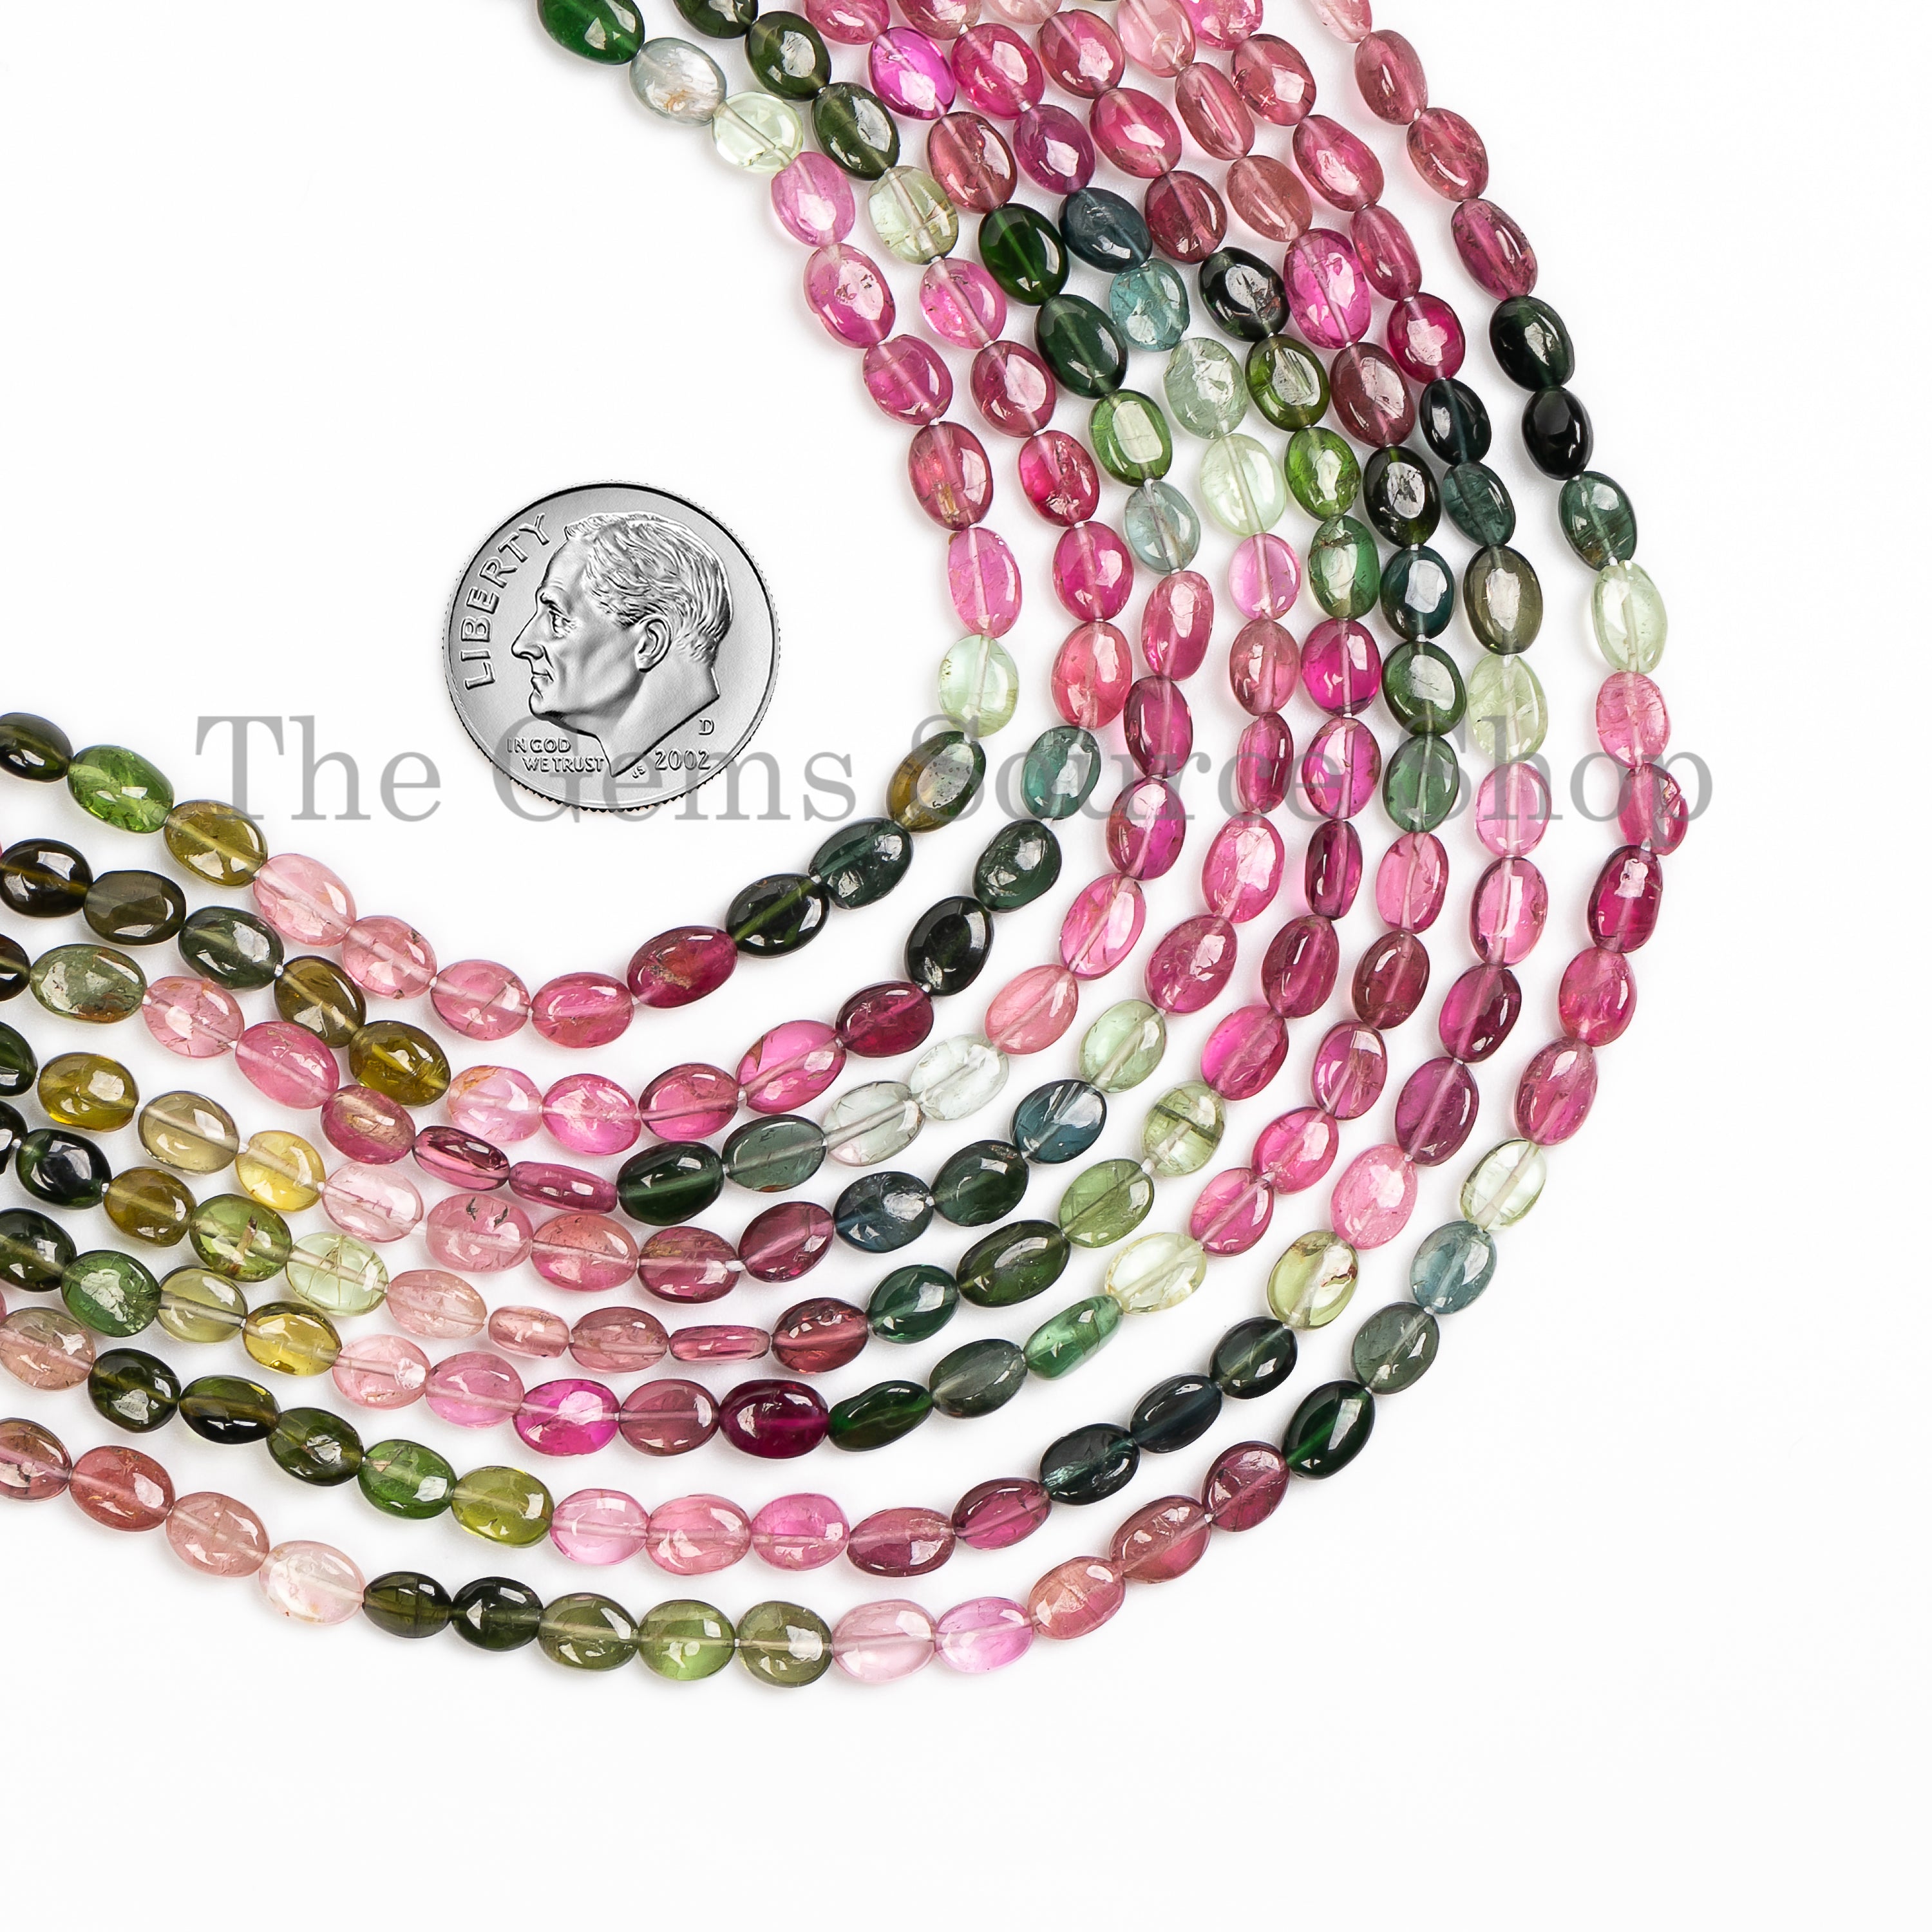 Multi Tourmaline Plain Oval Beads, Natural Multi Tourmaline Gemstone Oval Beads for Jewelry Making.